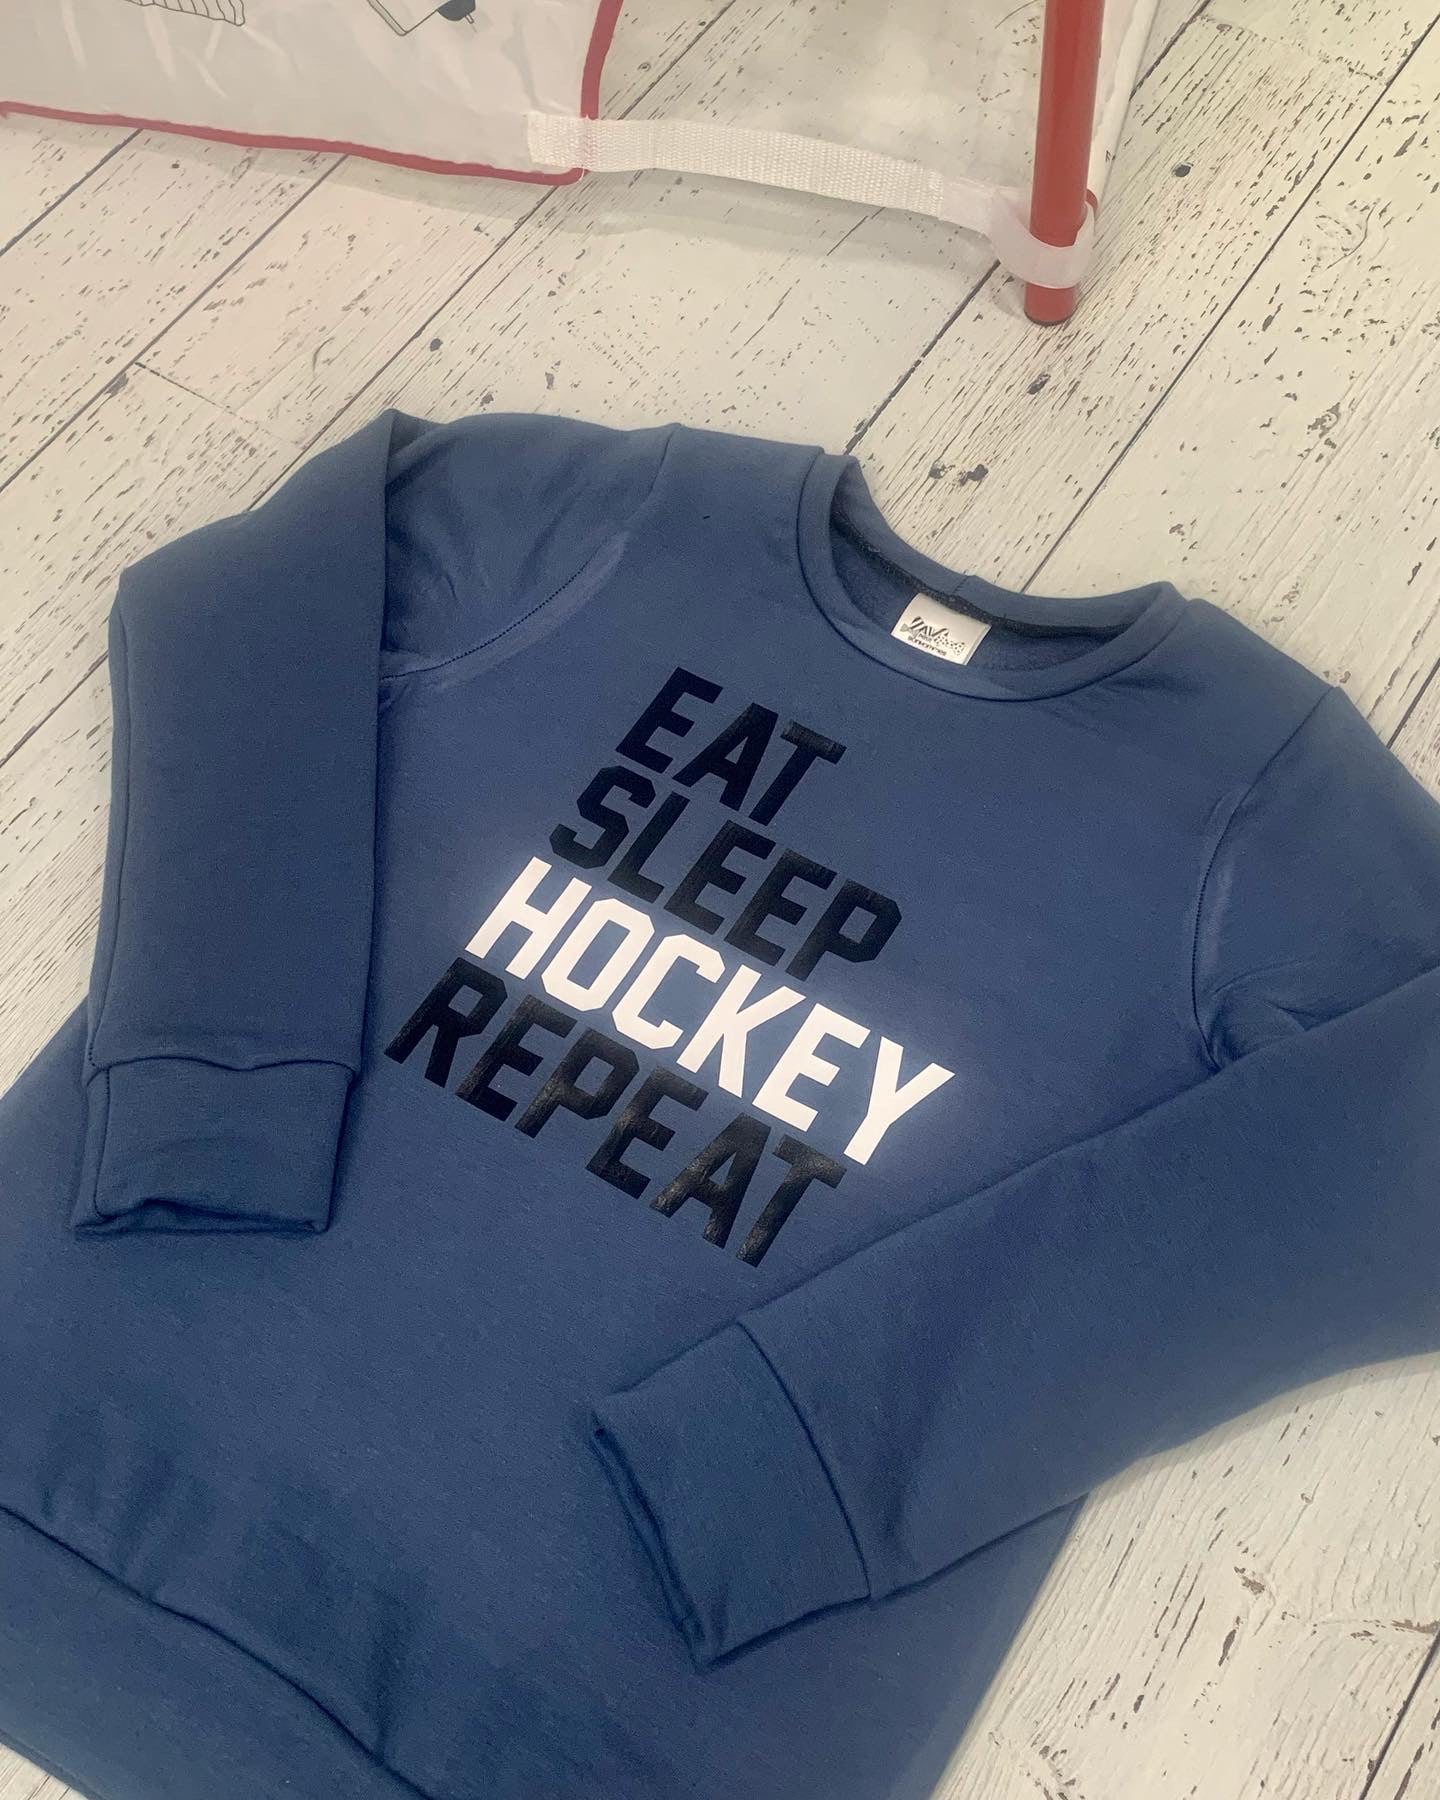 Bamboo Unisex Pullover Sweater - Eat Sleep Hockey Repeat